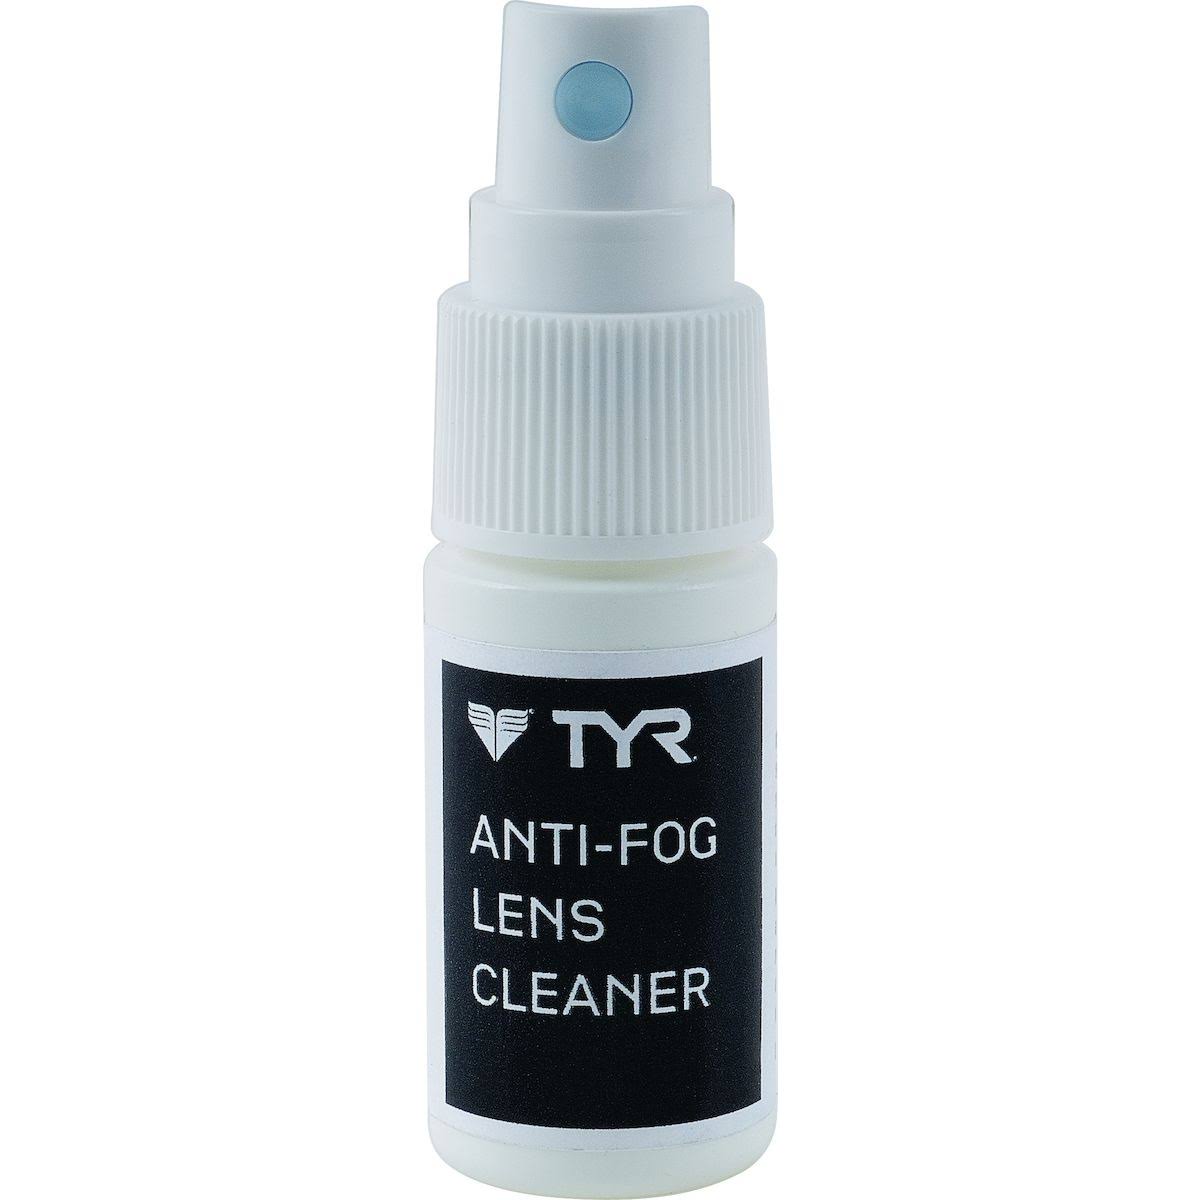 Tyr Anti-Fog and Lens Cleaner Spray